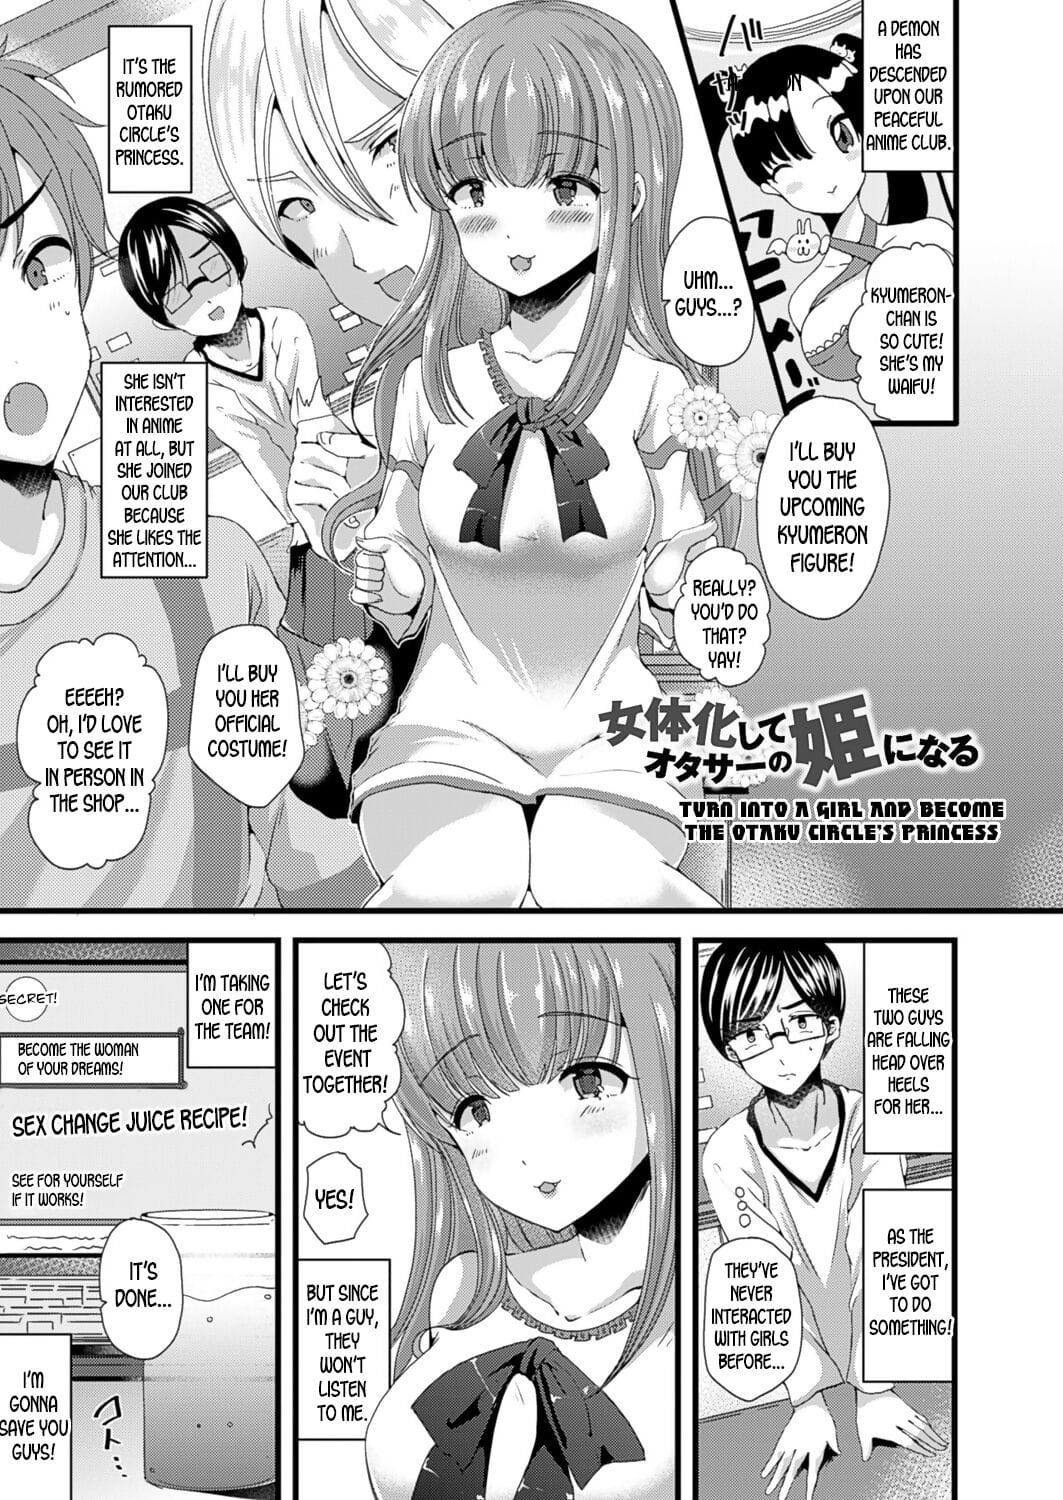 Nyotaika Shite OtaCir no Hime ni Naru - Turn into a girl and become the otaku circles princess page 1